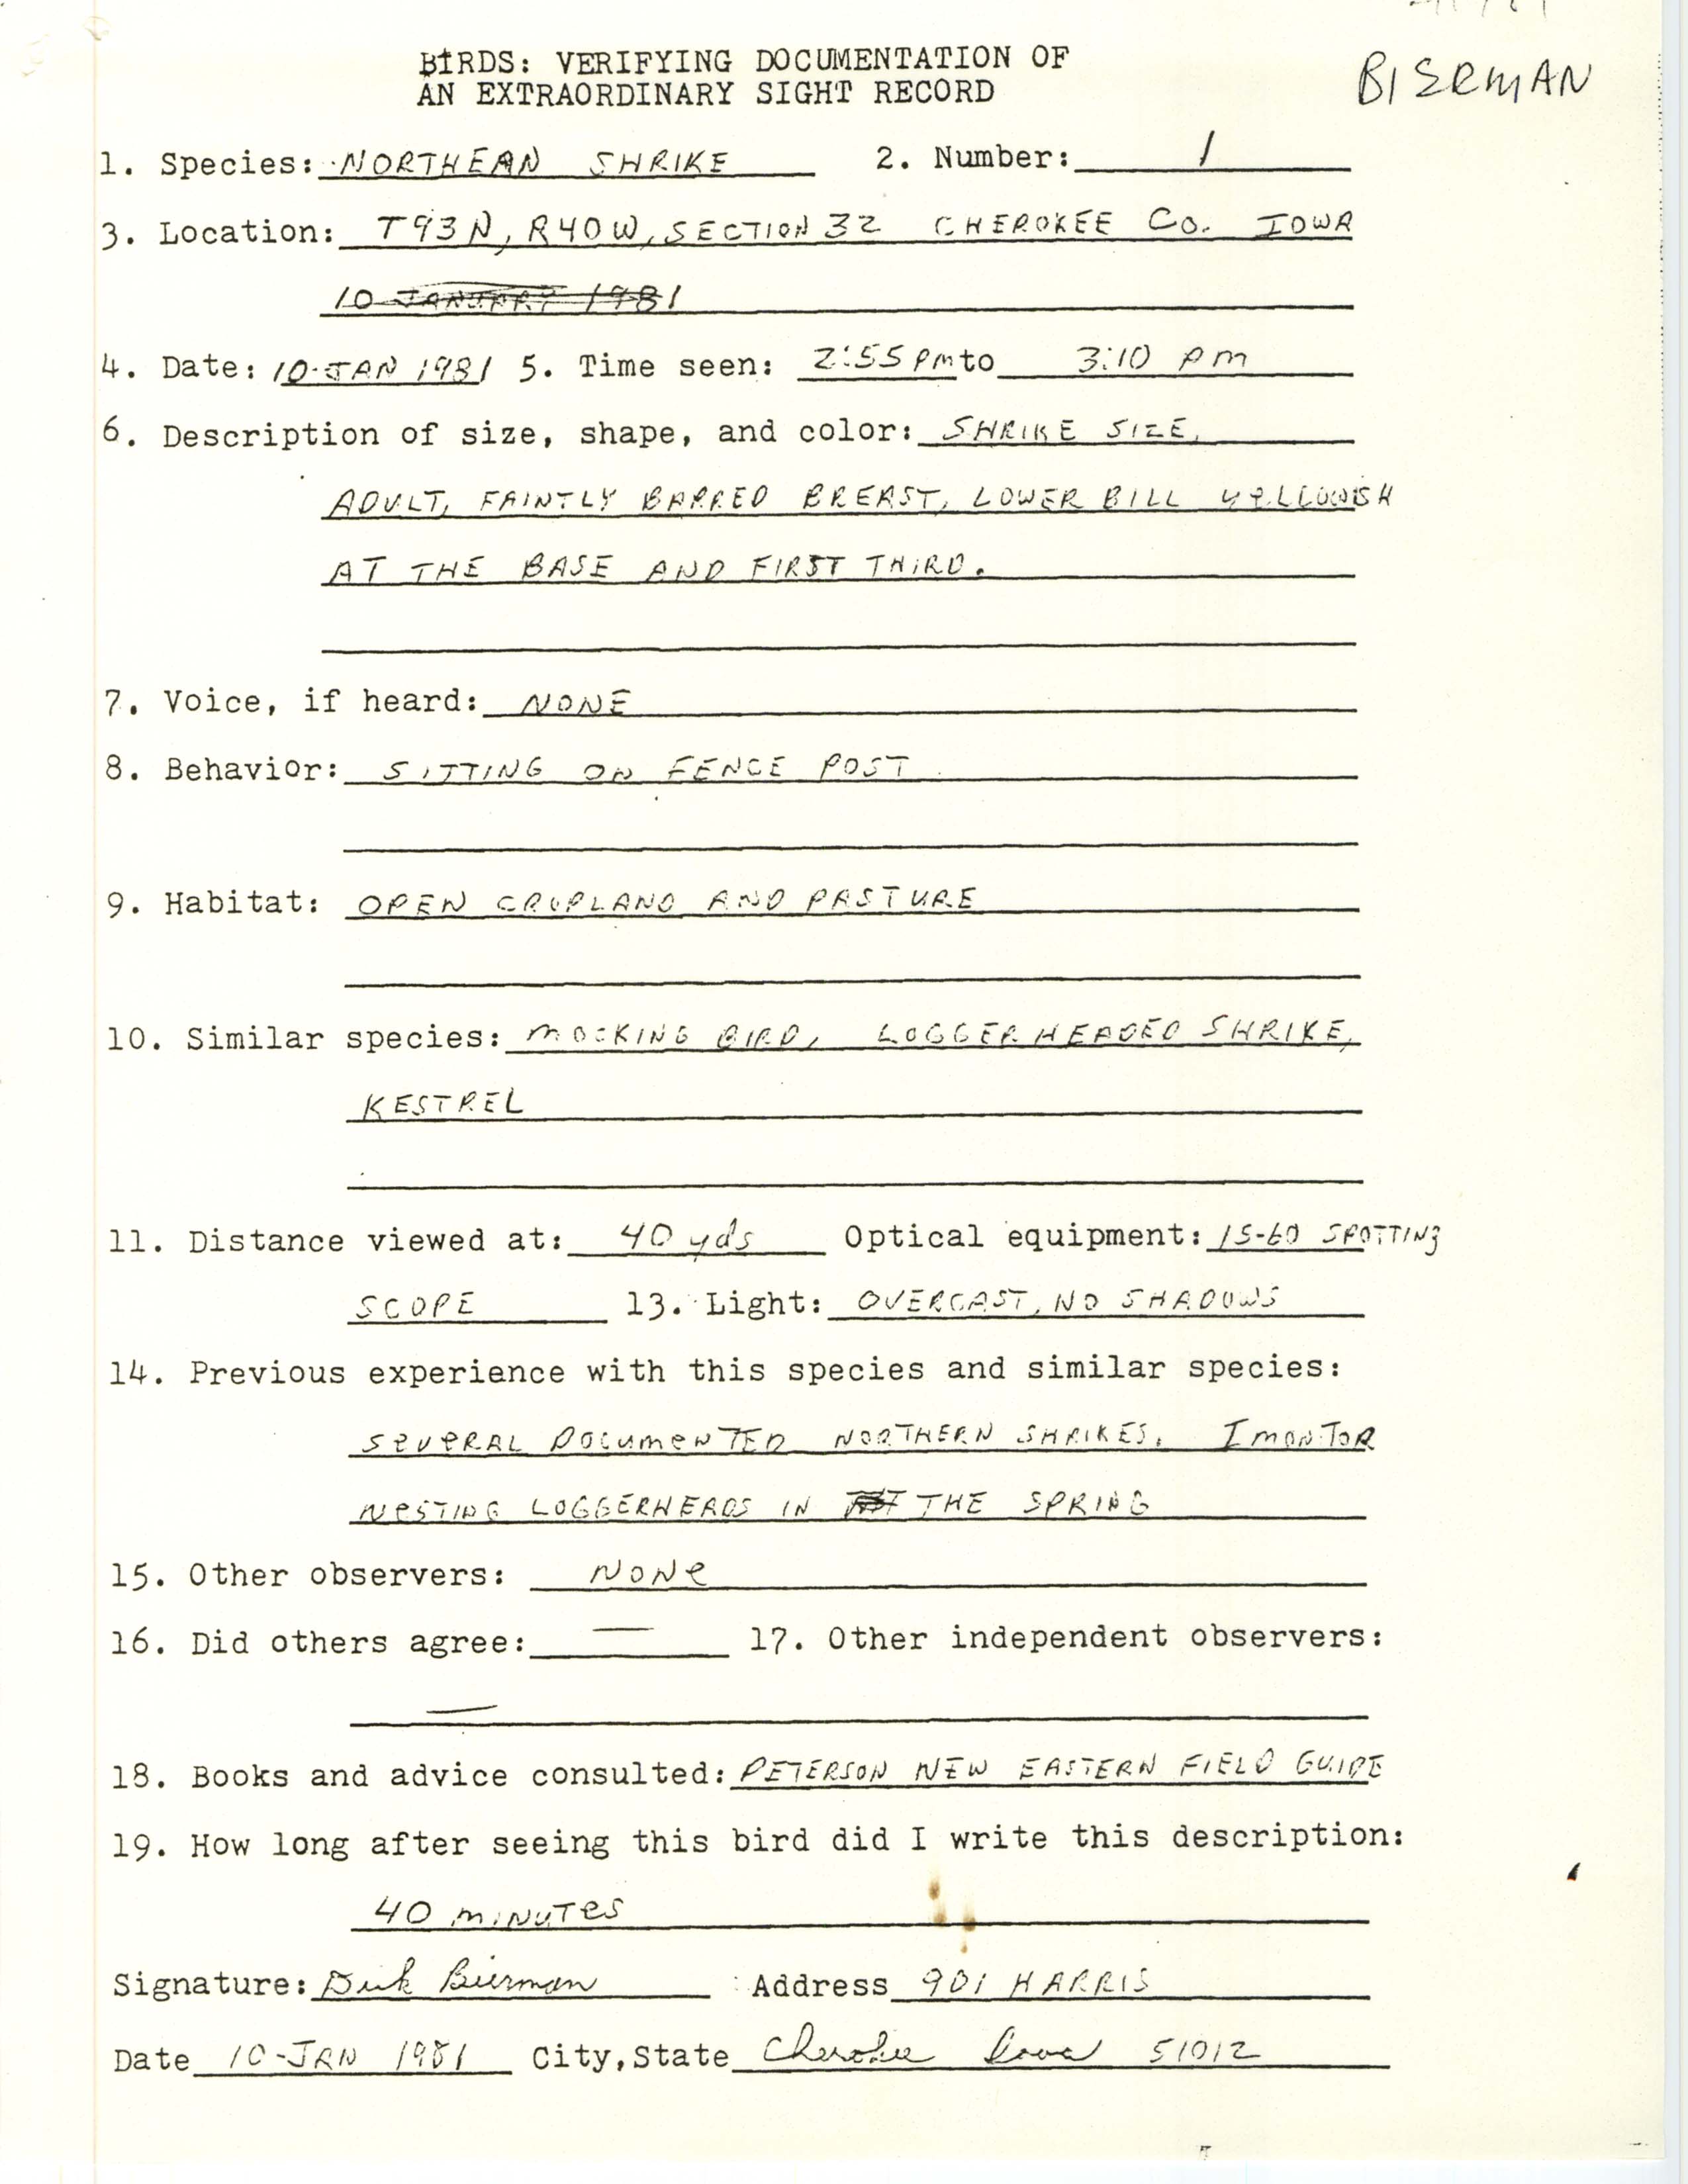 Rare bird documentation form for Northern Shrike near Gere Creek, 1981